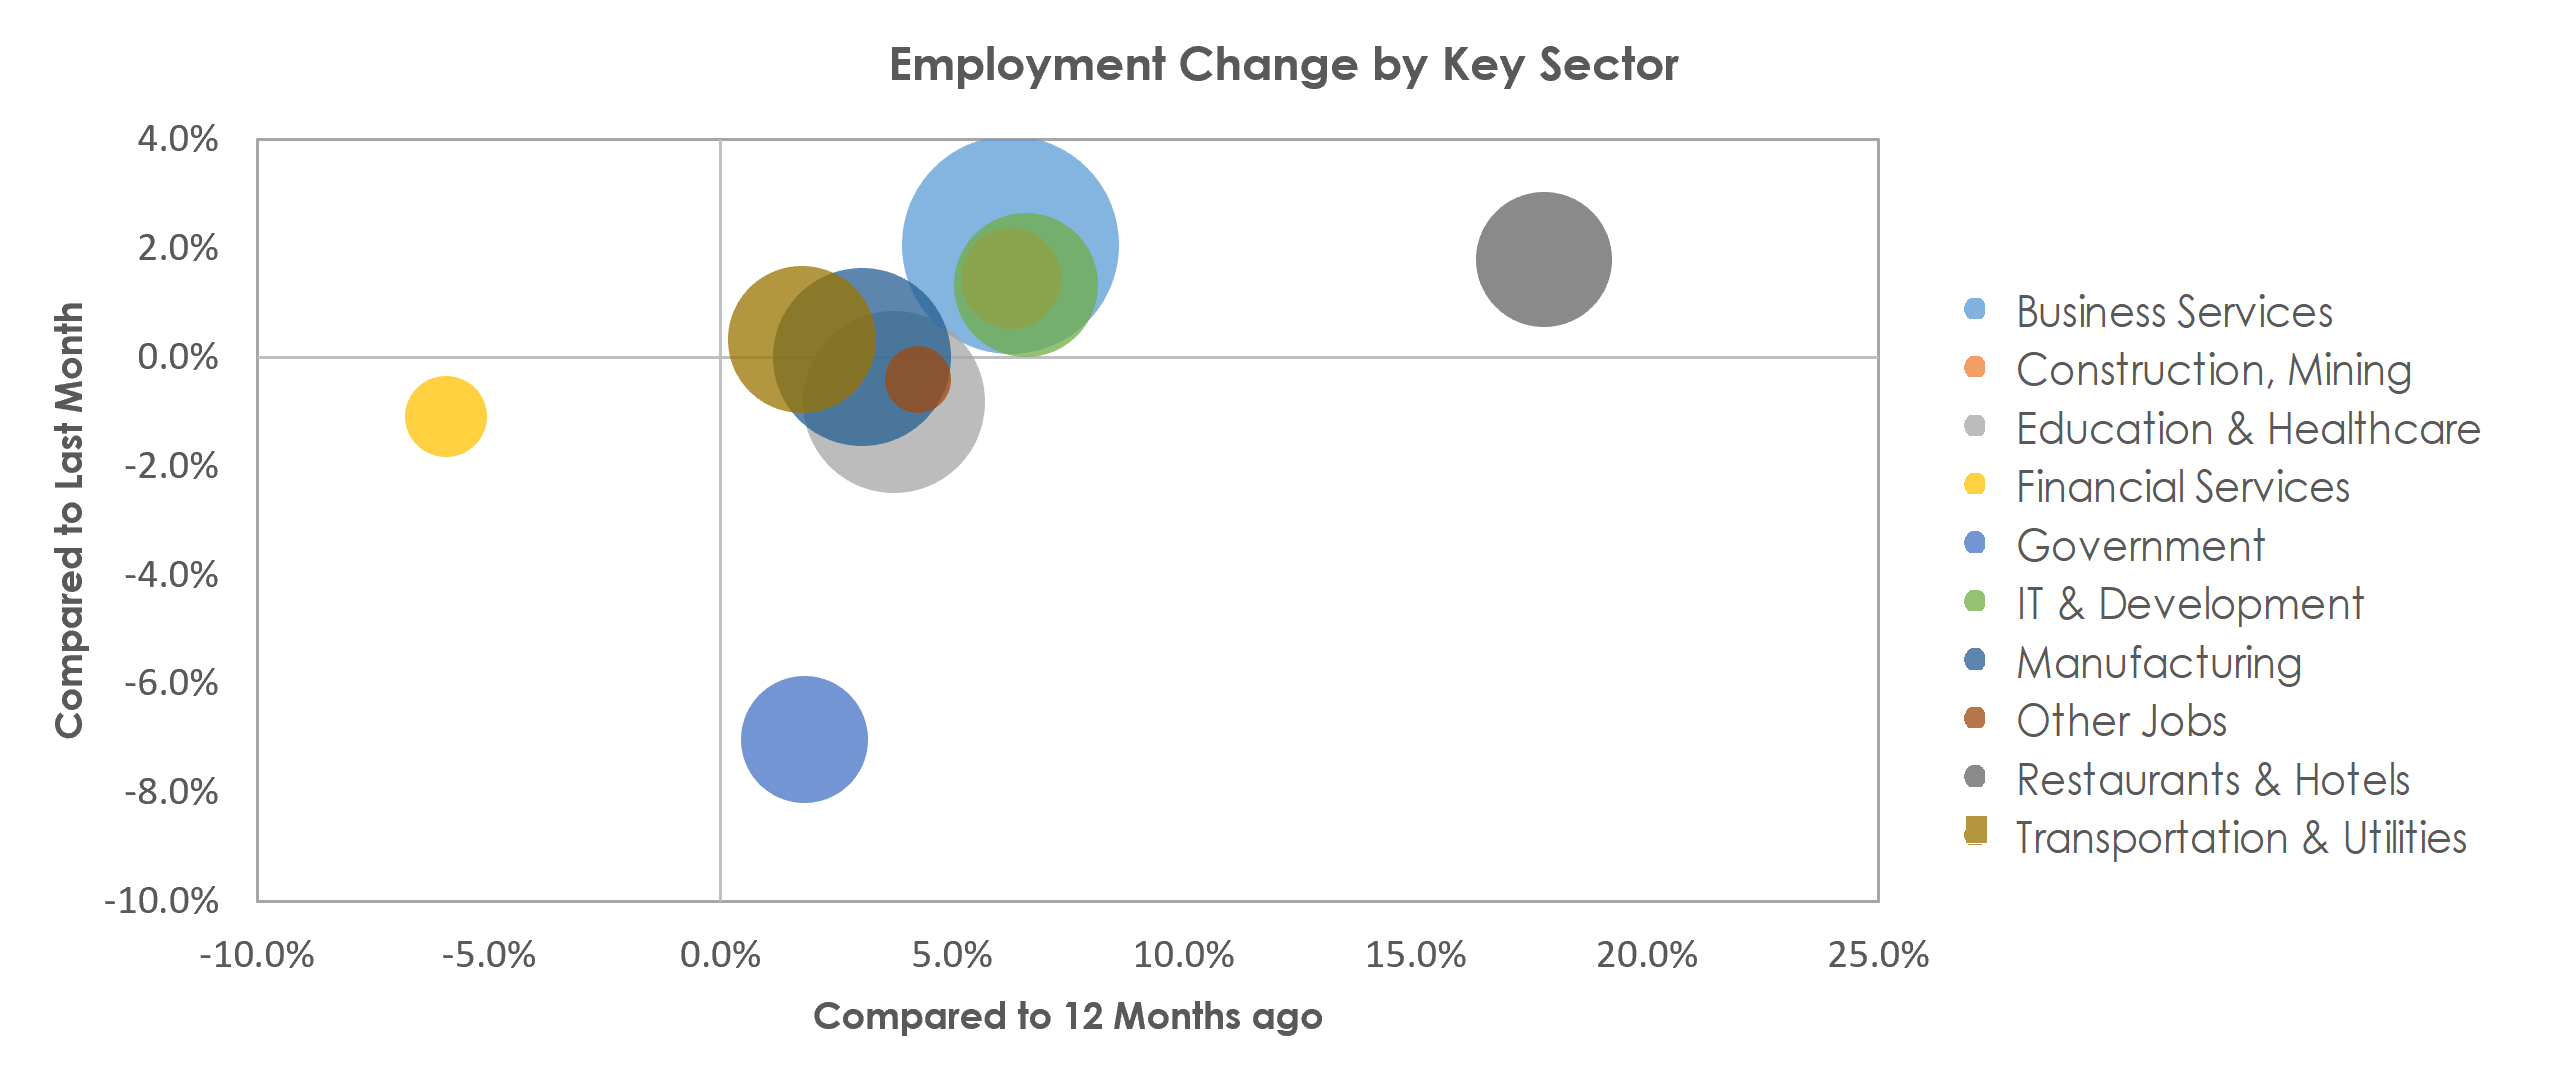 San Jose-Sunnyvale-Santa Clara, CA Unemployment by Industry July 2022